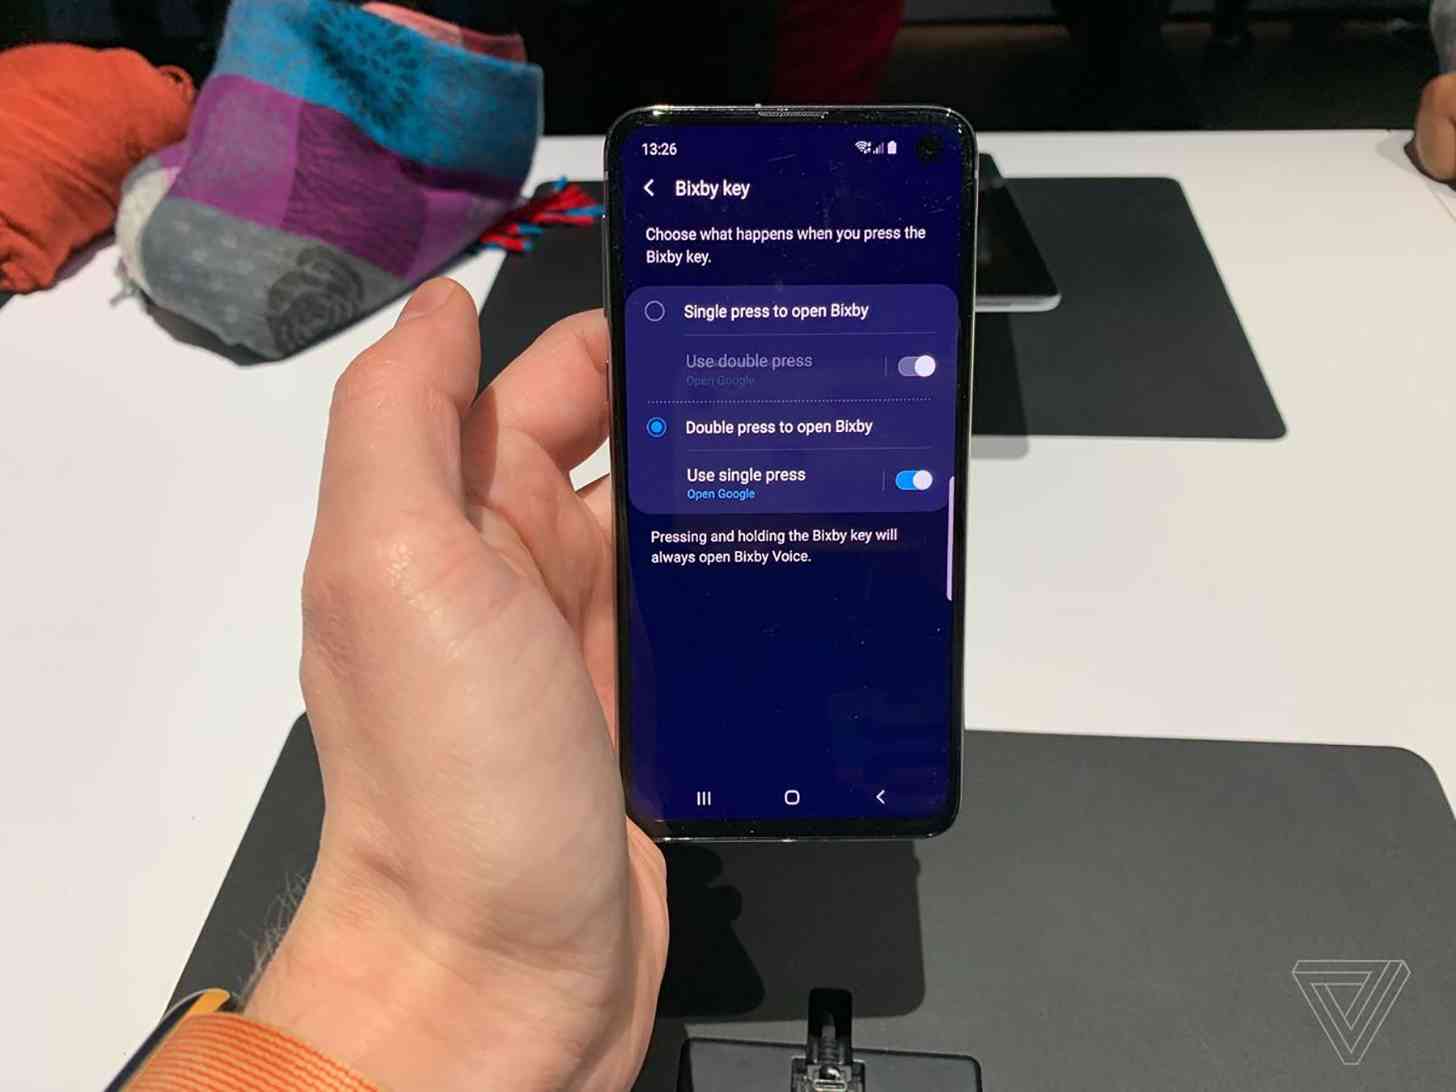 Samsung Galaxy S10 Bixby button remap